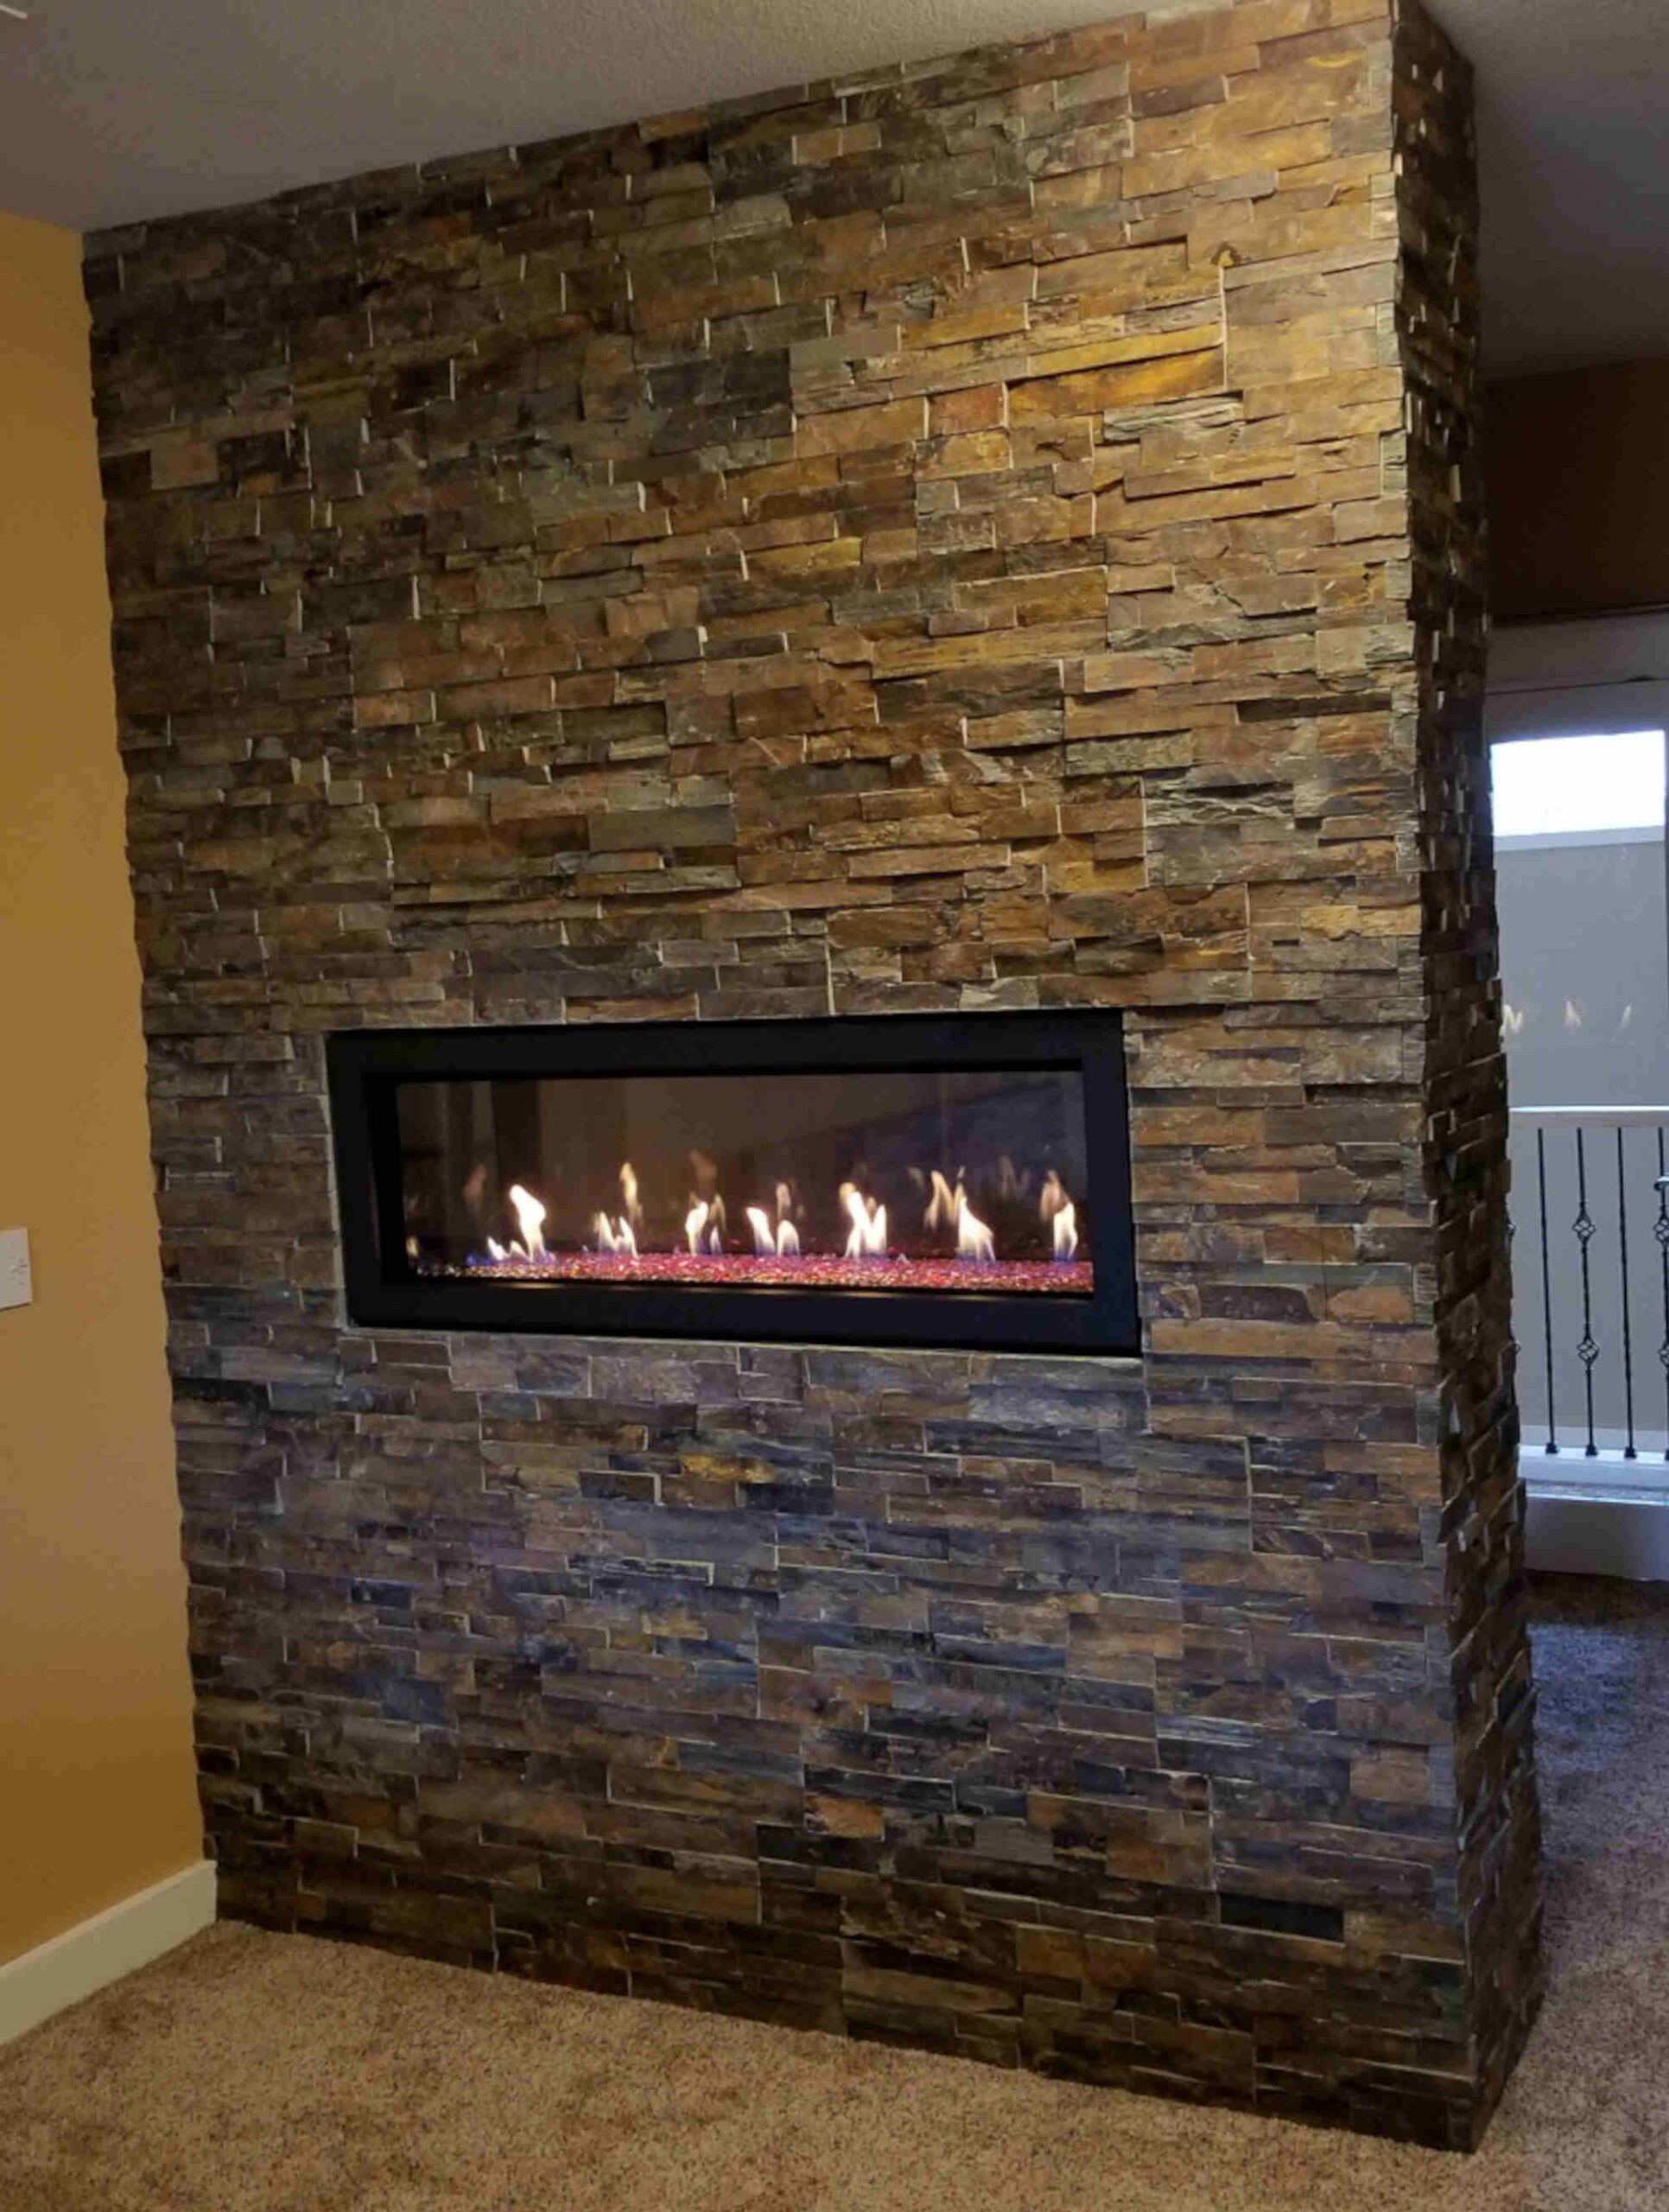 See-thru fireplace with real stone veneer